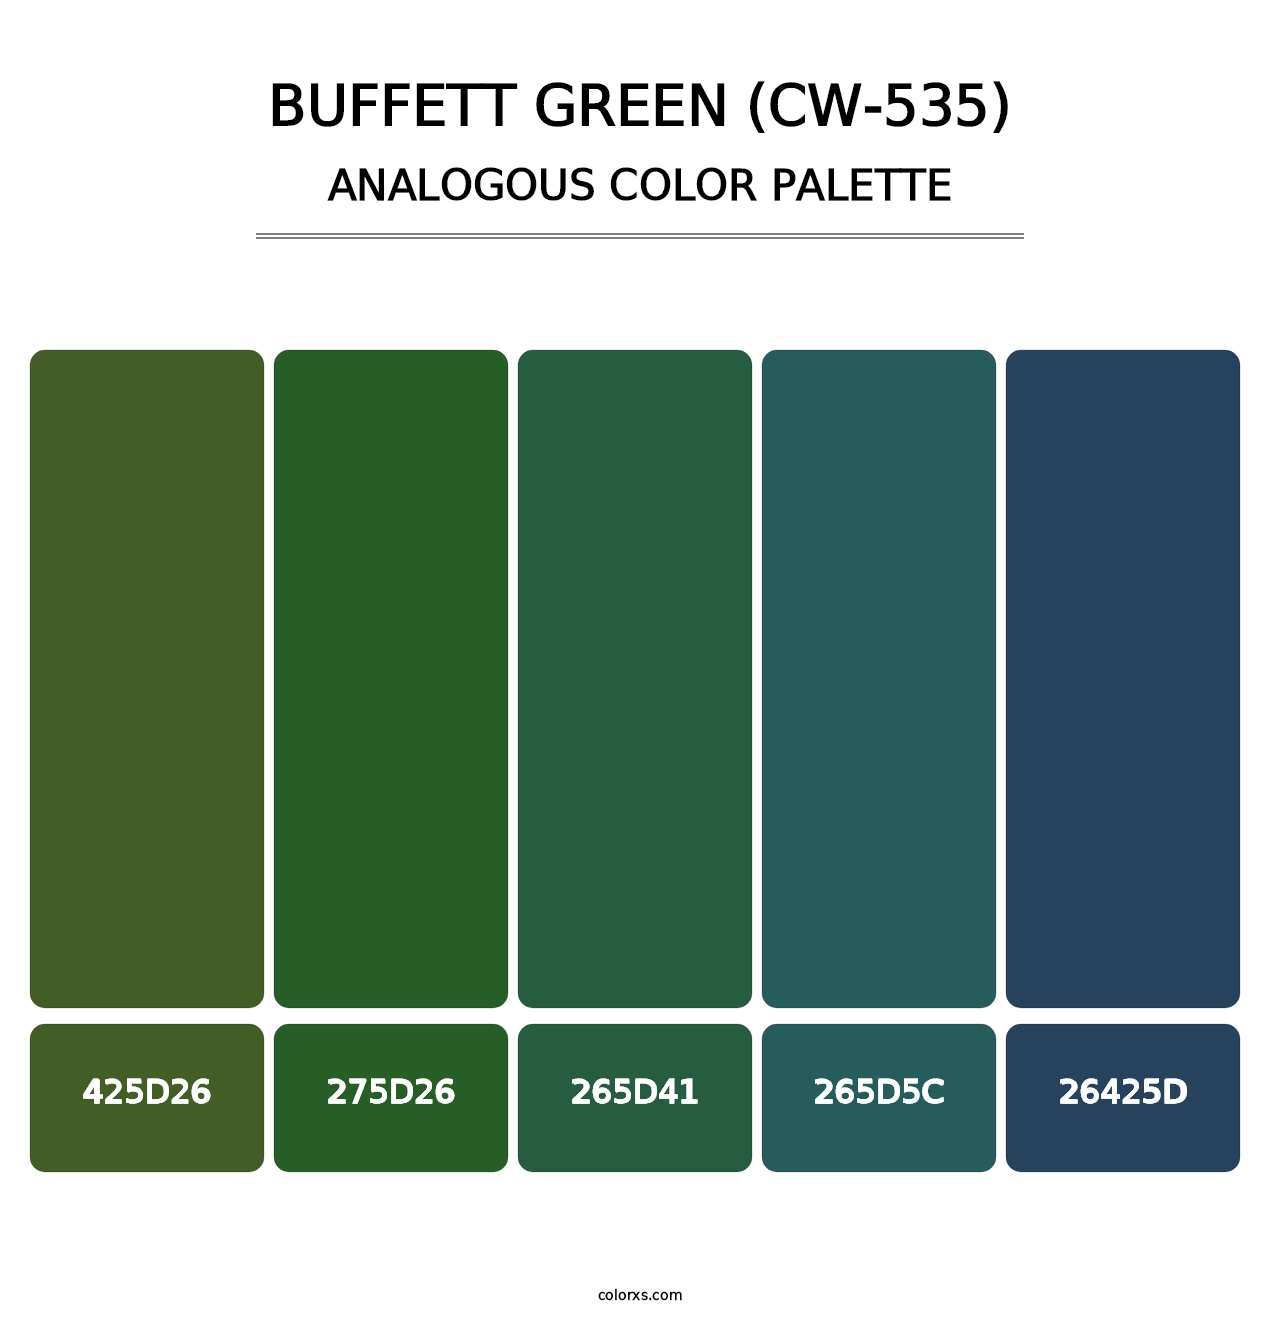 Buffett Green (CW-535) - Analogous Color Palette